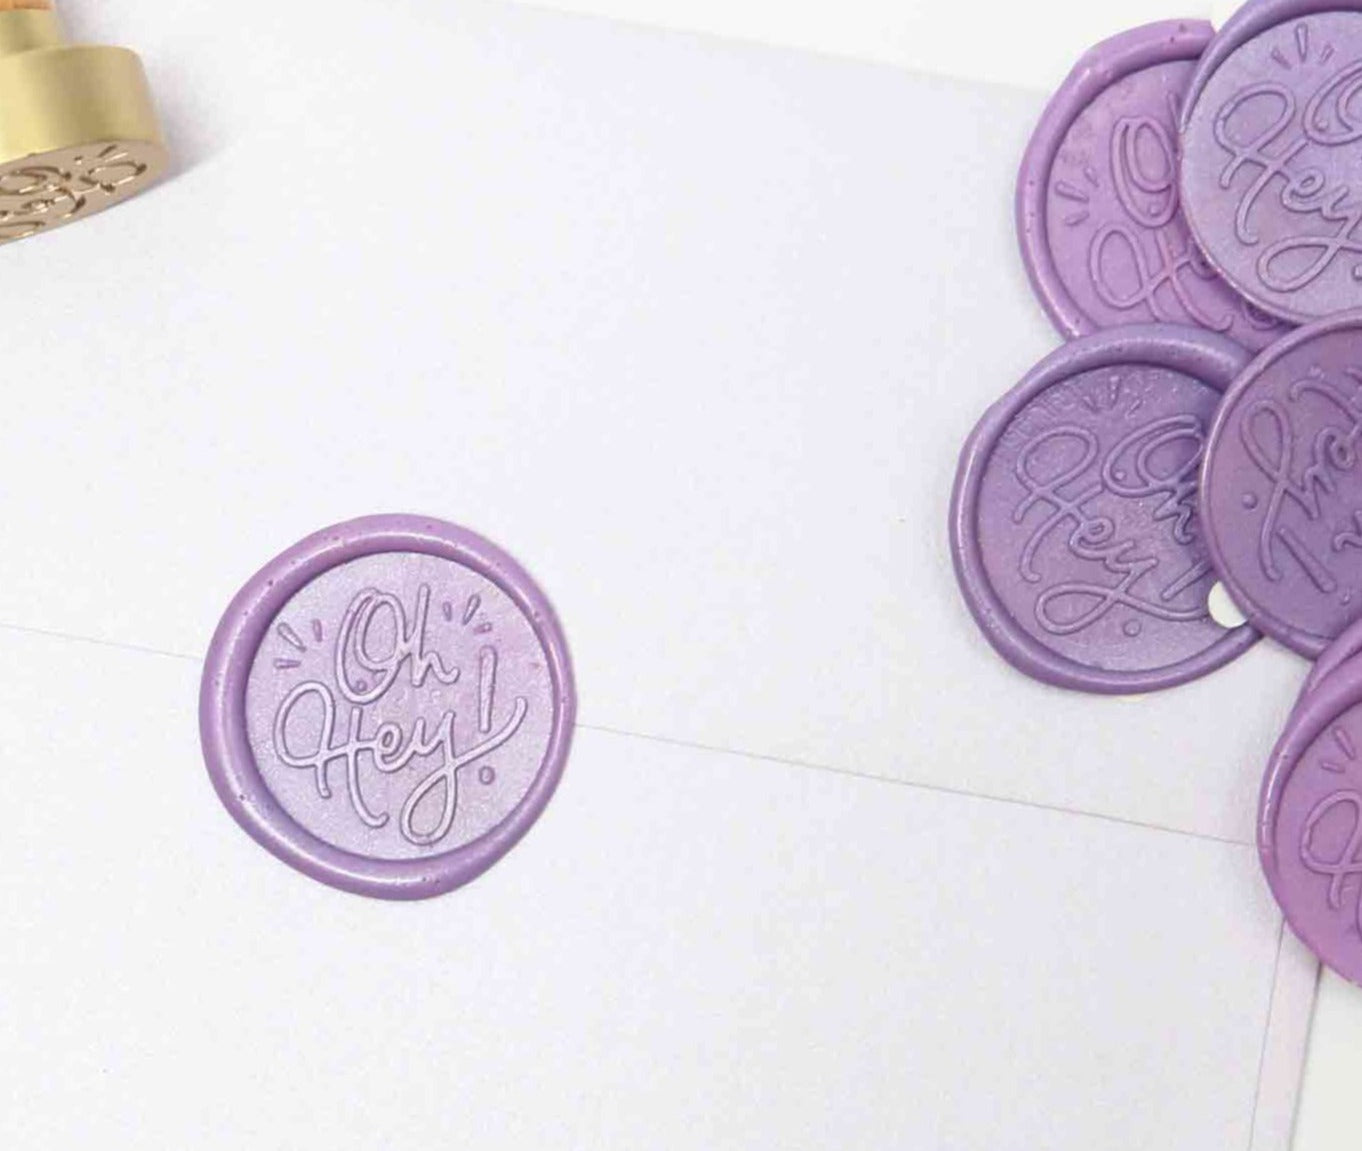 Oh Hey! Wax Seal Stamp (Gratitude Series)